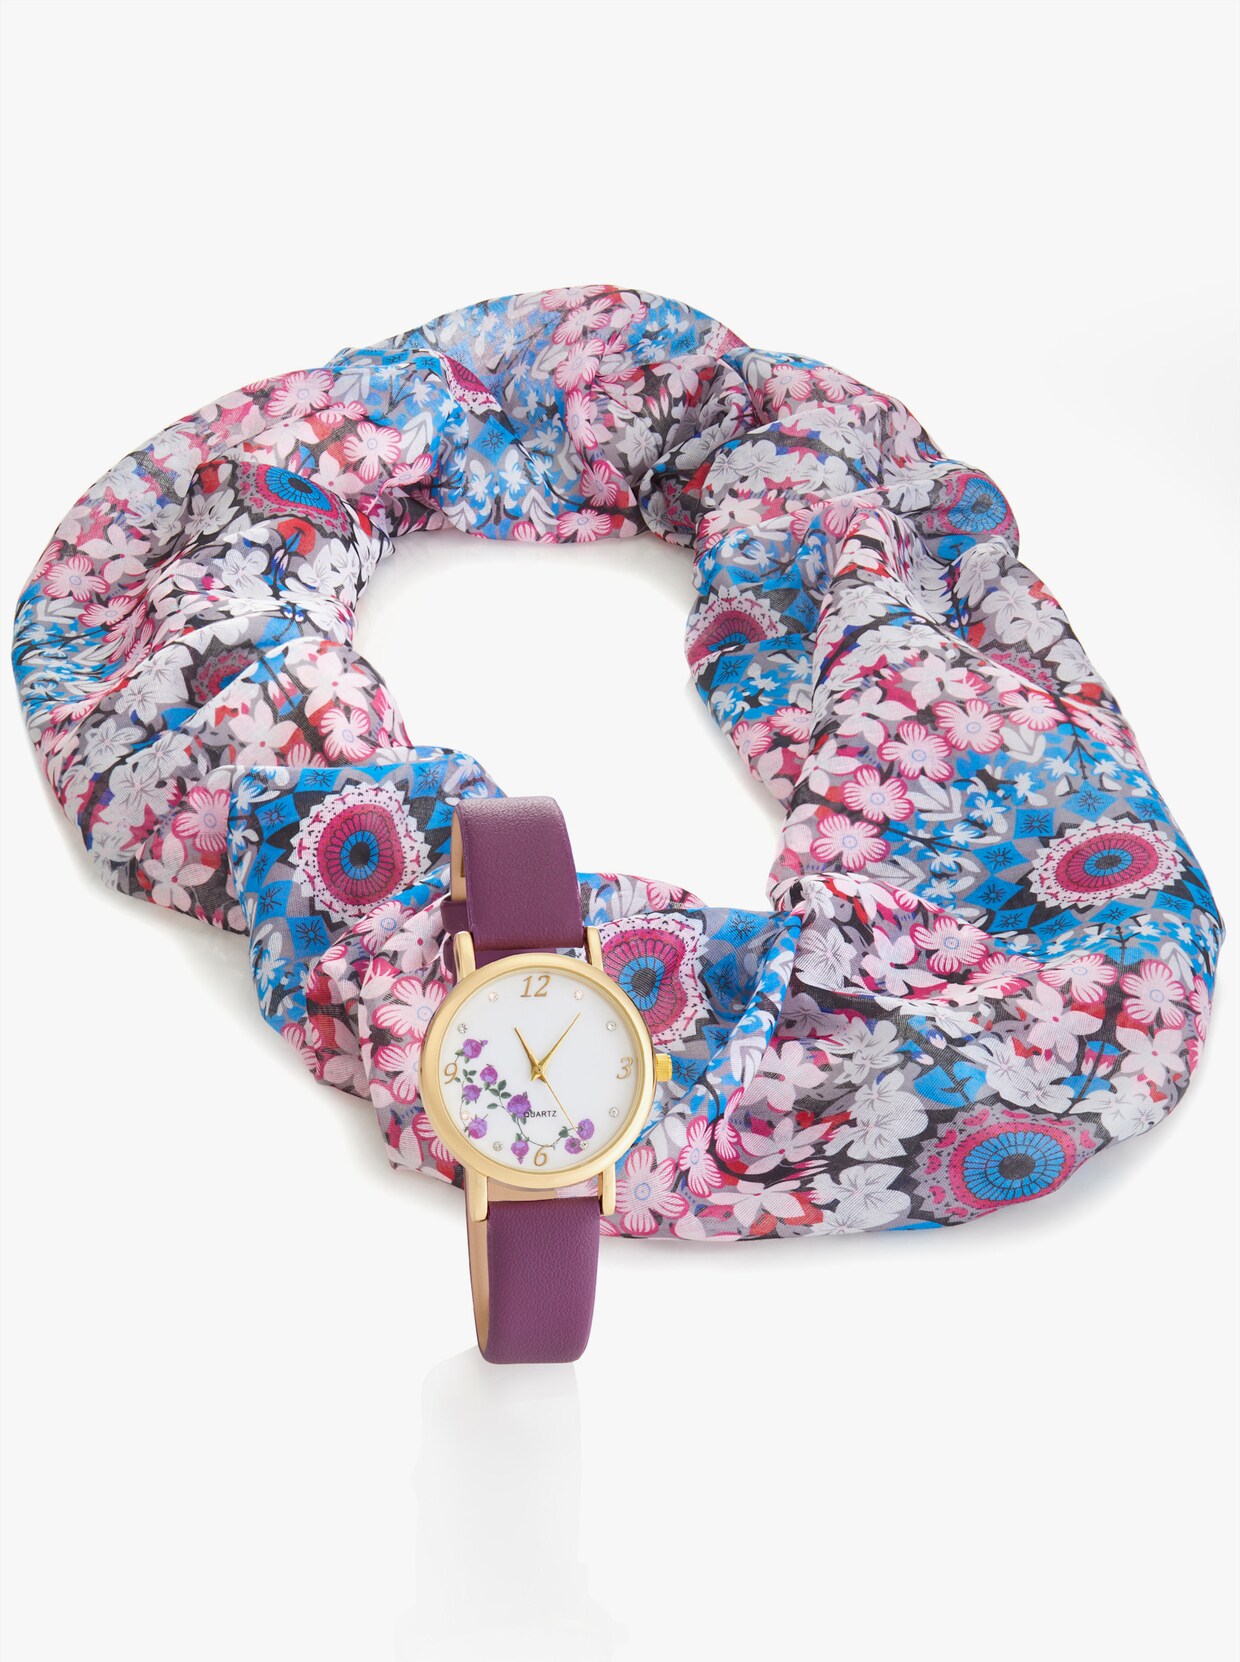 Loop Schal mit Armbanduhr - lila